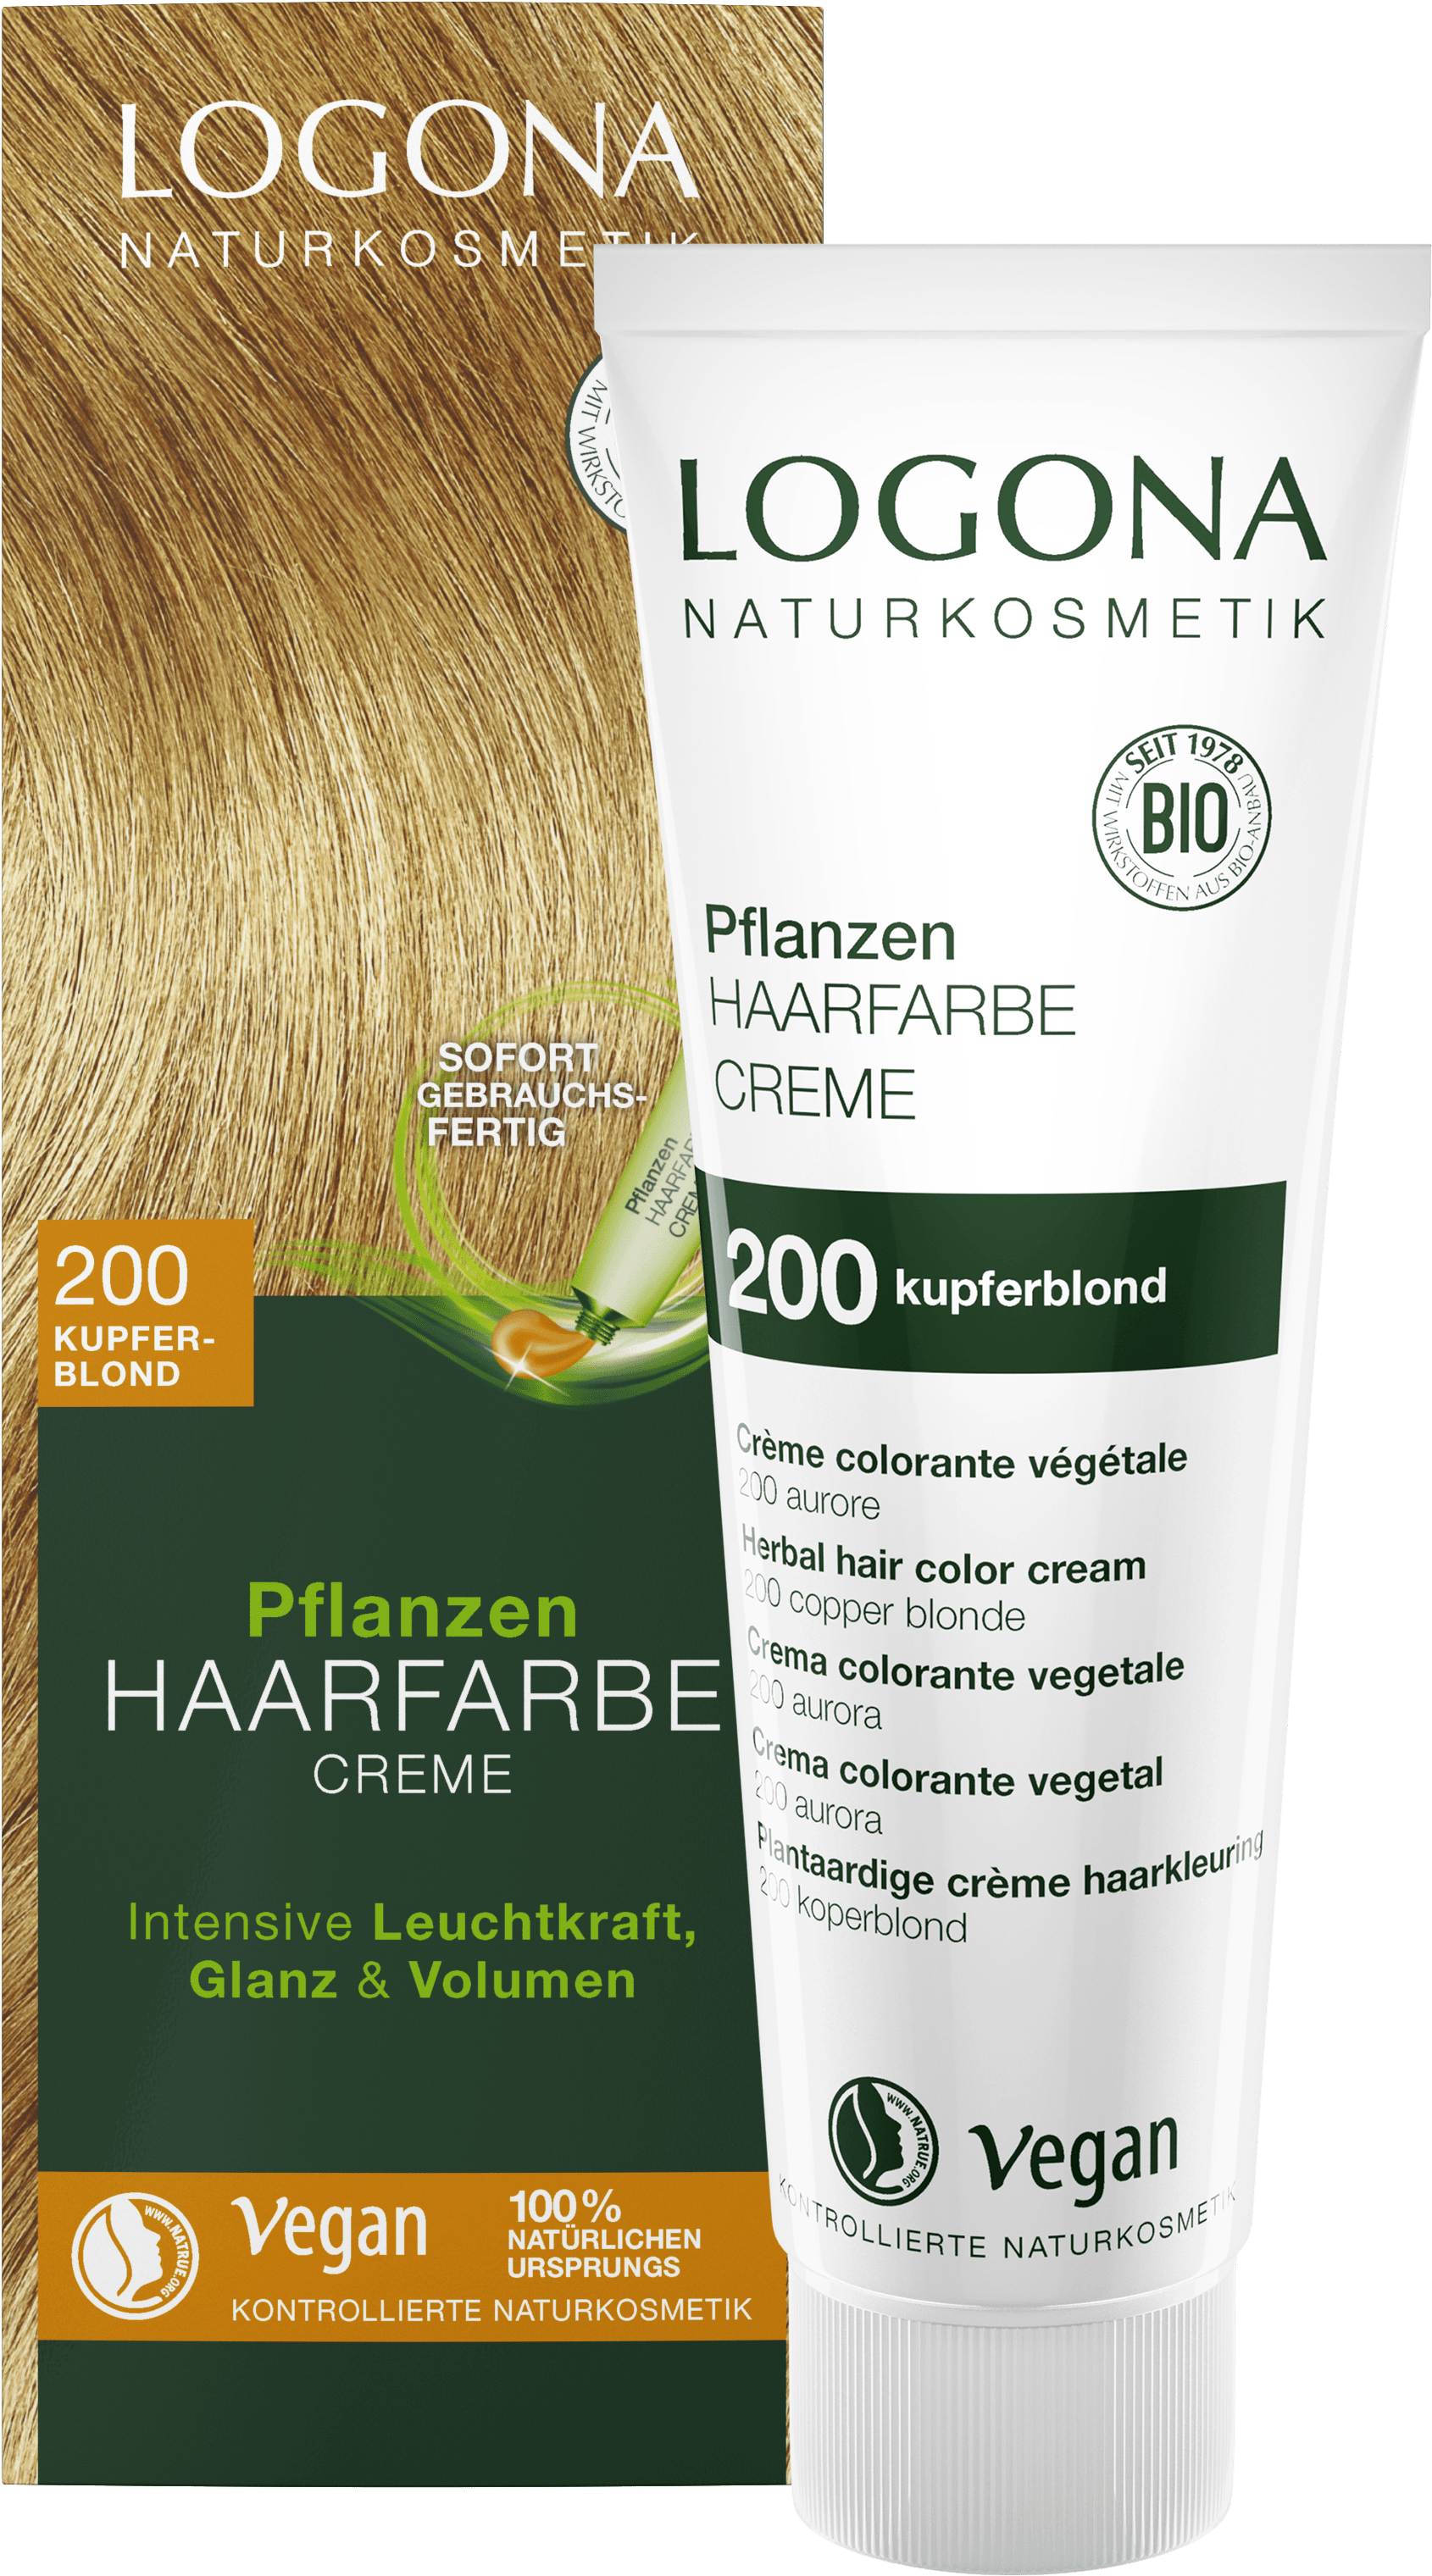 Pflanzen-Haarfarbe Creme 200 Kupferblond | Naturkosmetik LOGONA